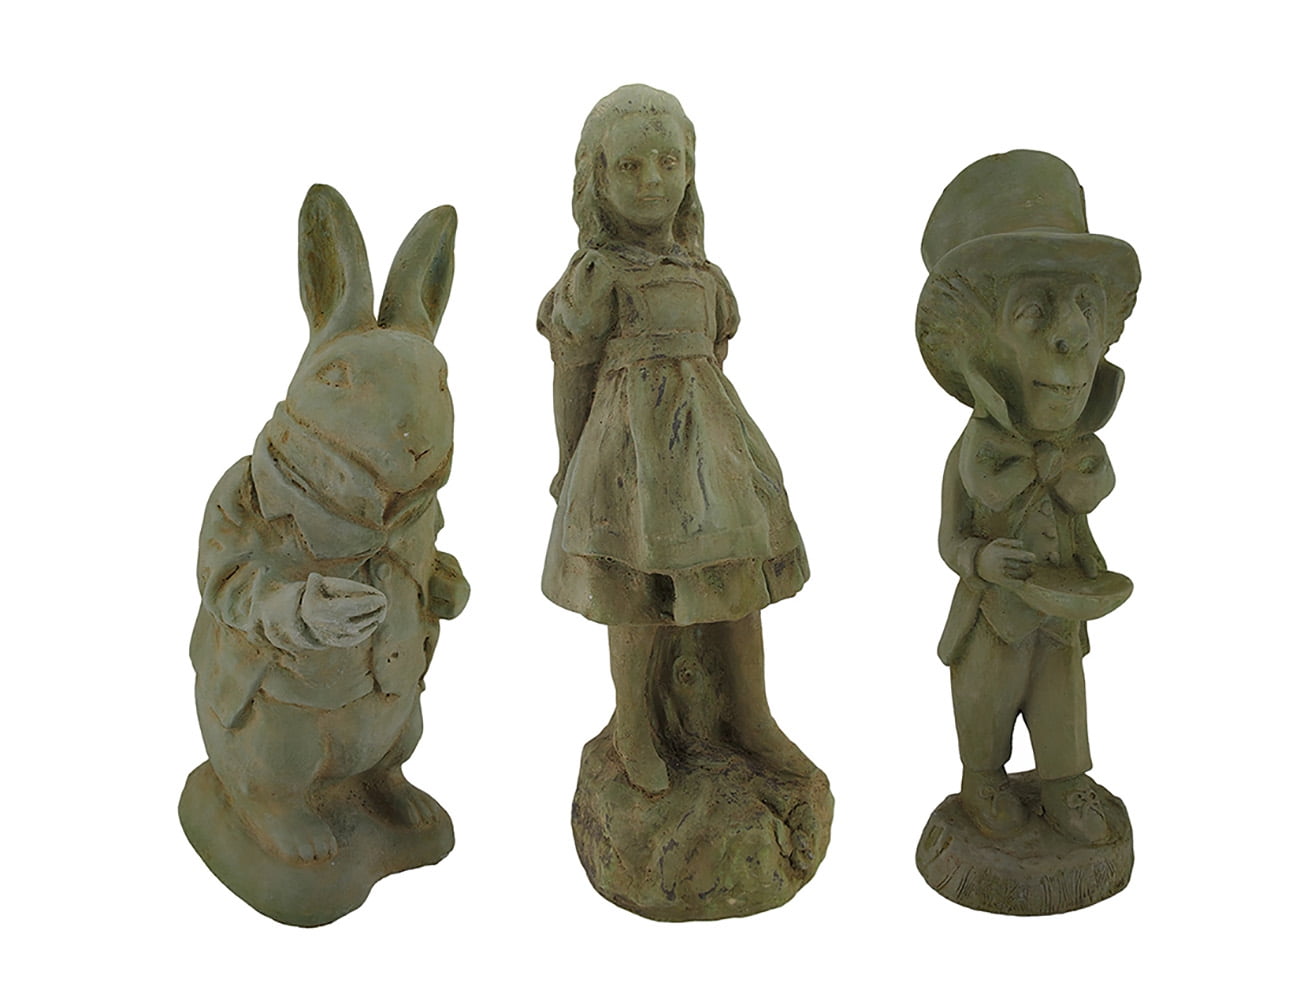 Alice in Wonderland White Rabbit Kit for Adults